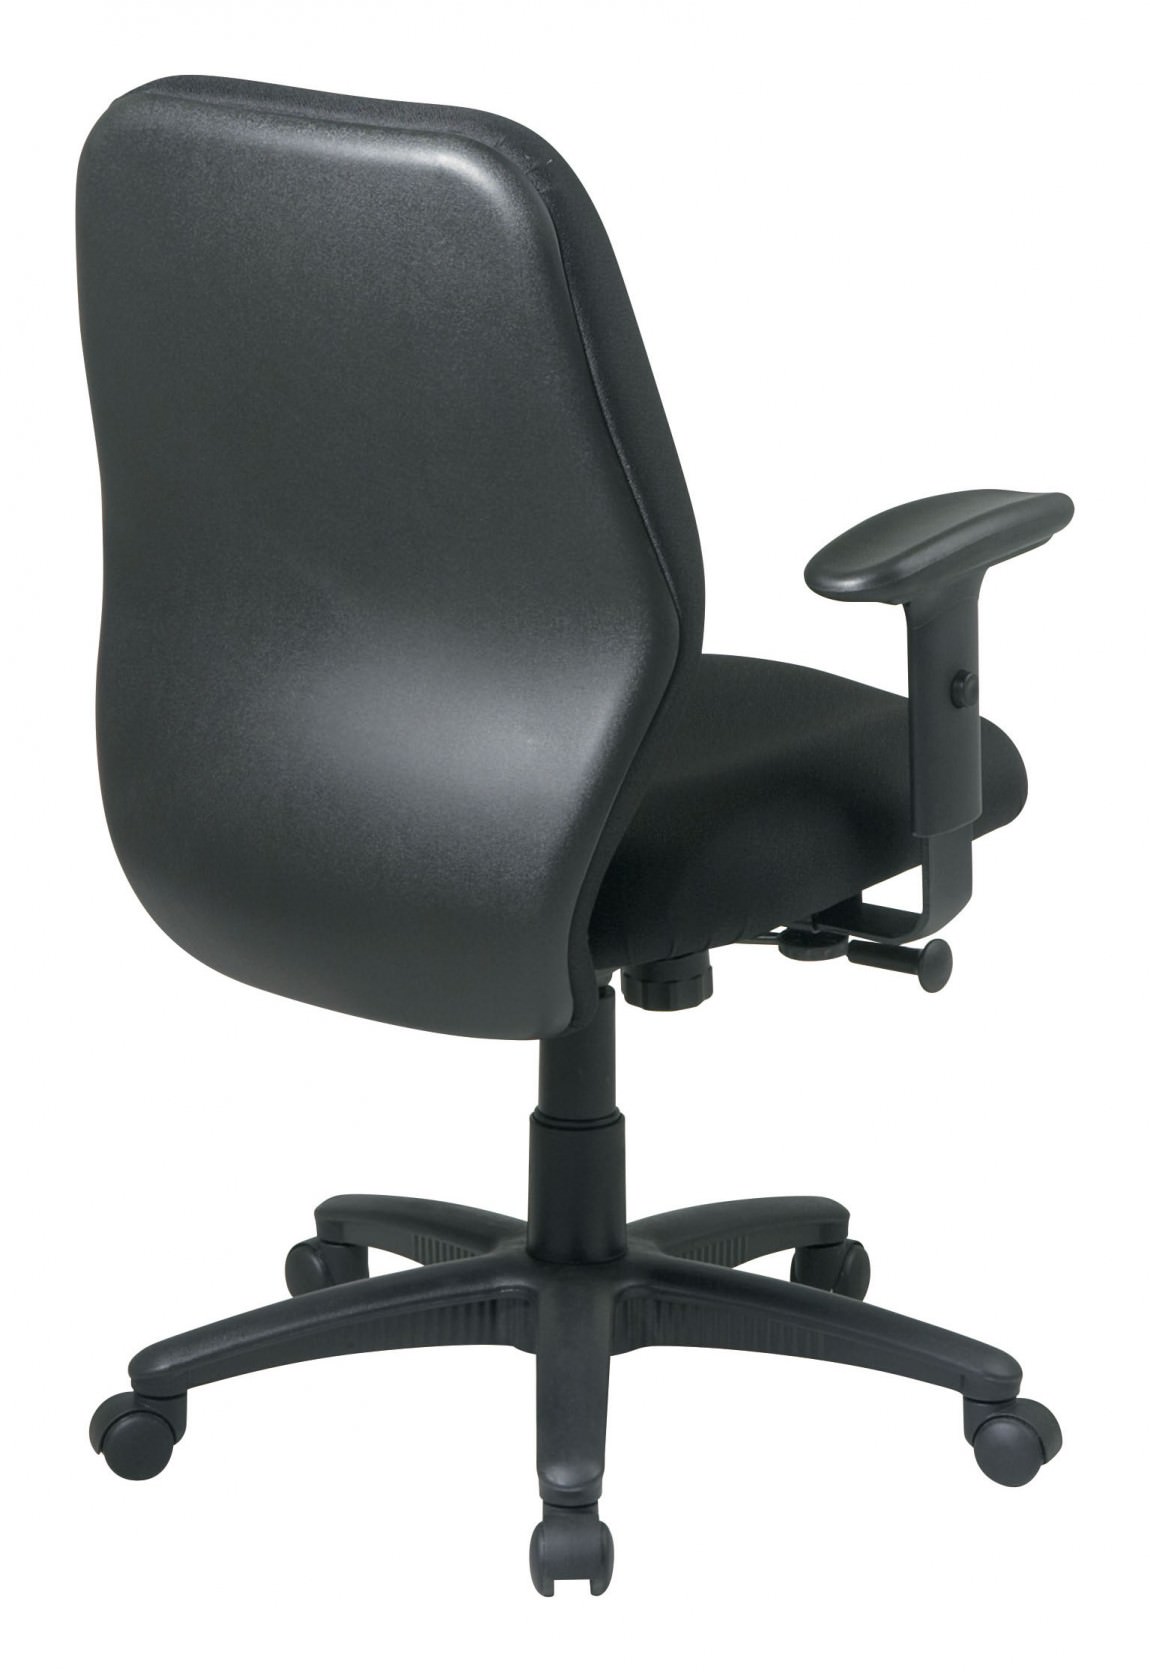 https://madisonliquidators.com/images/p/1150/25975-mid-back-padded-office-chair-3.jpg